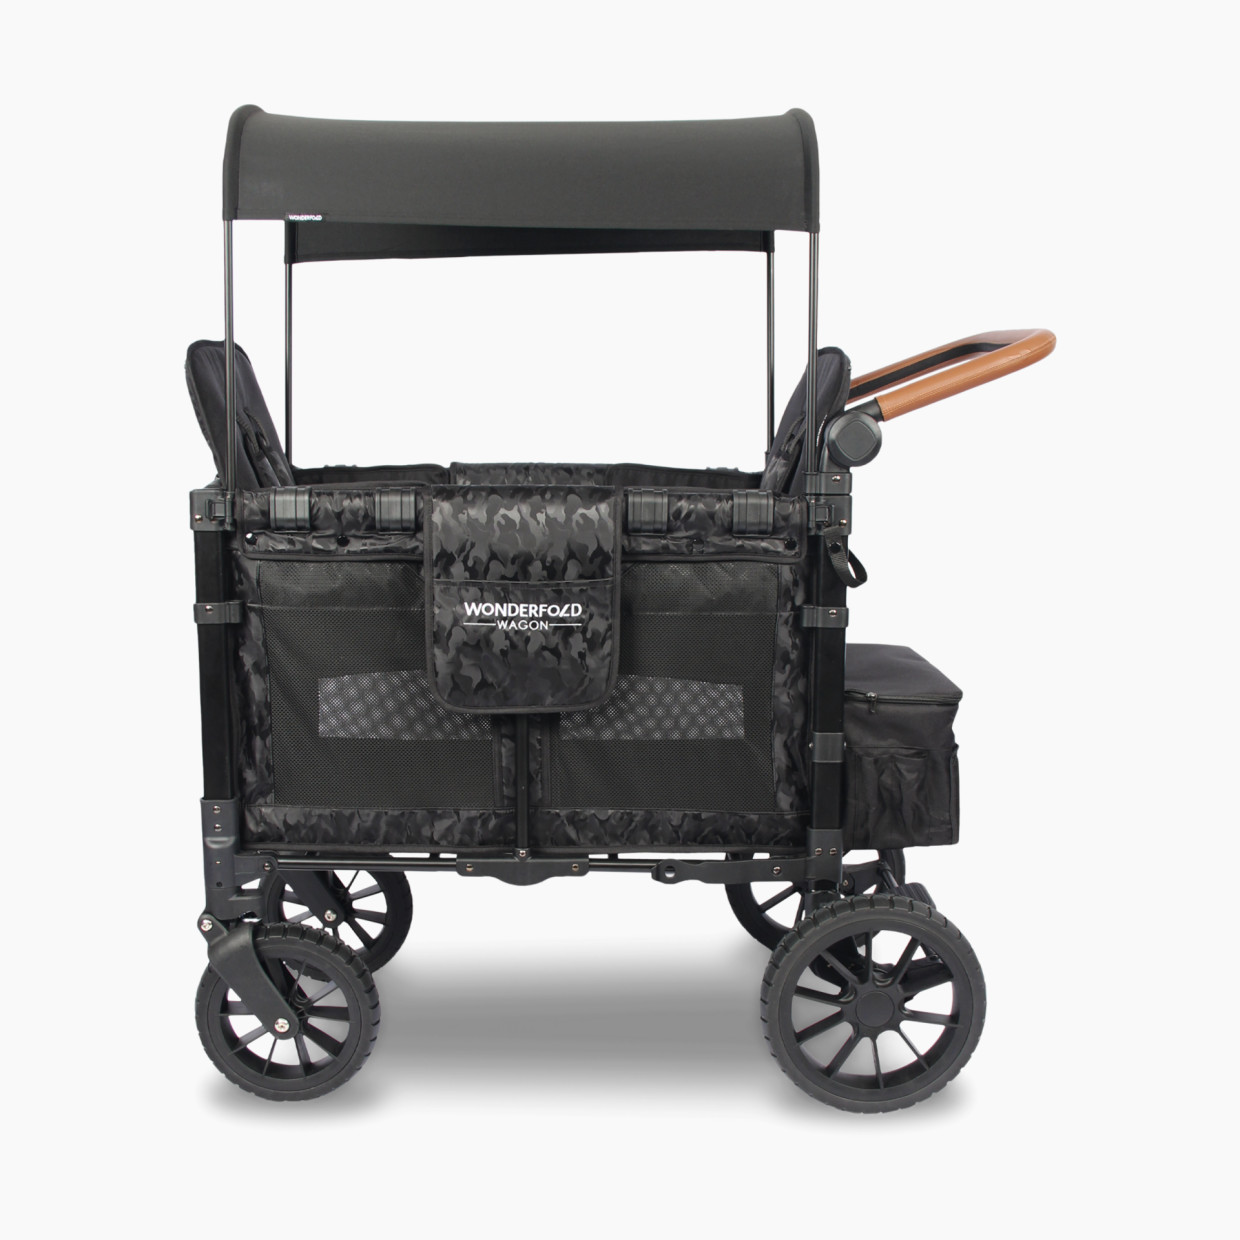 WonderFold Wagon W2 Luxe Double Stroller Wagon (2 Seater) - Black Camo.